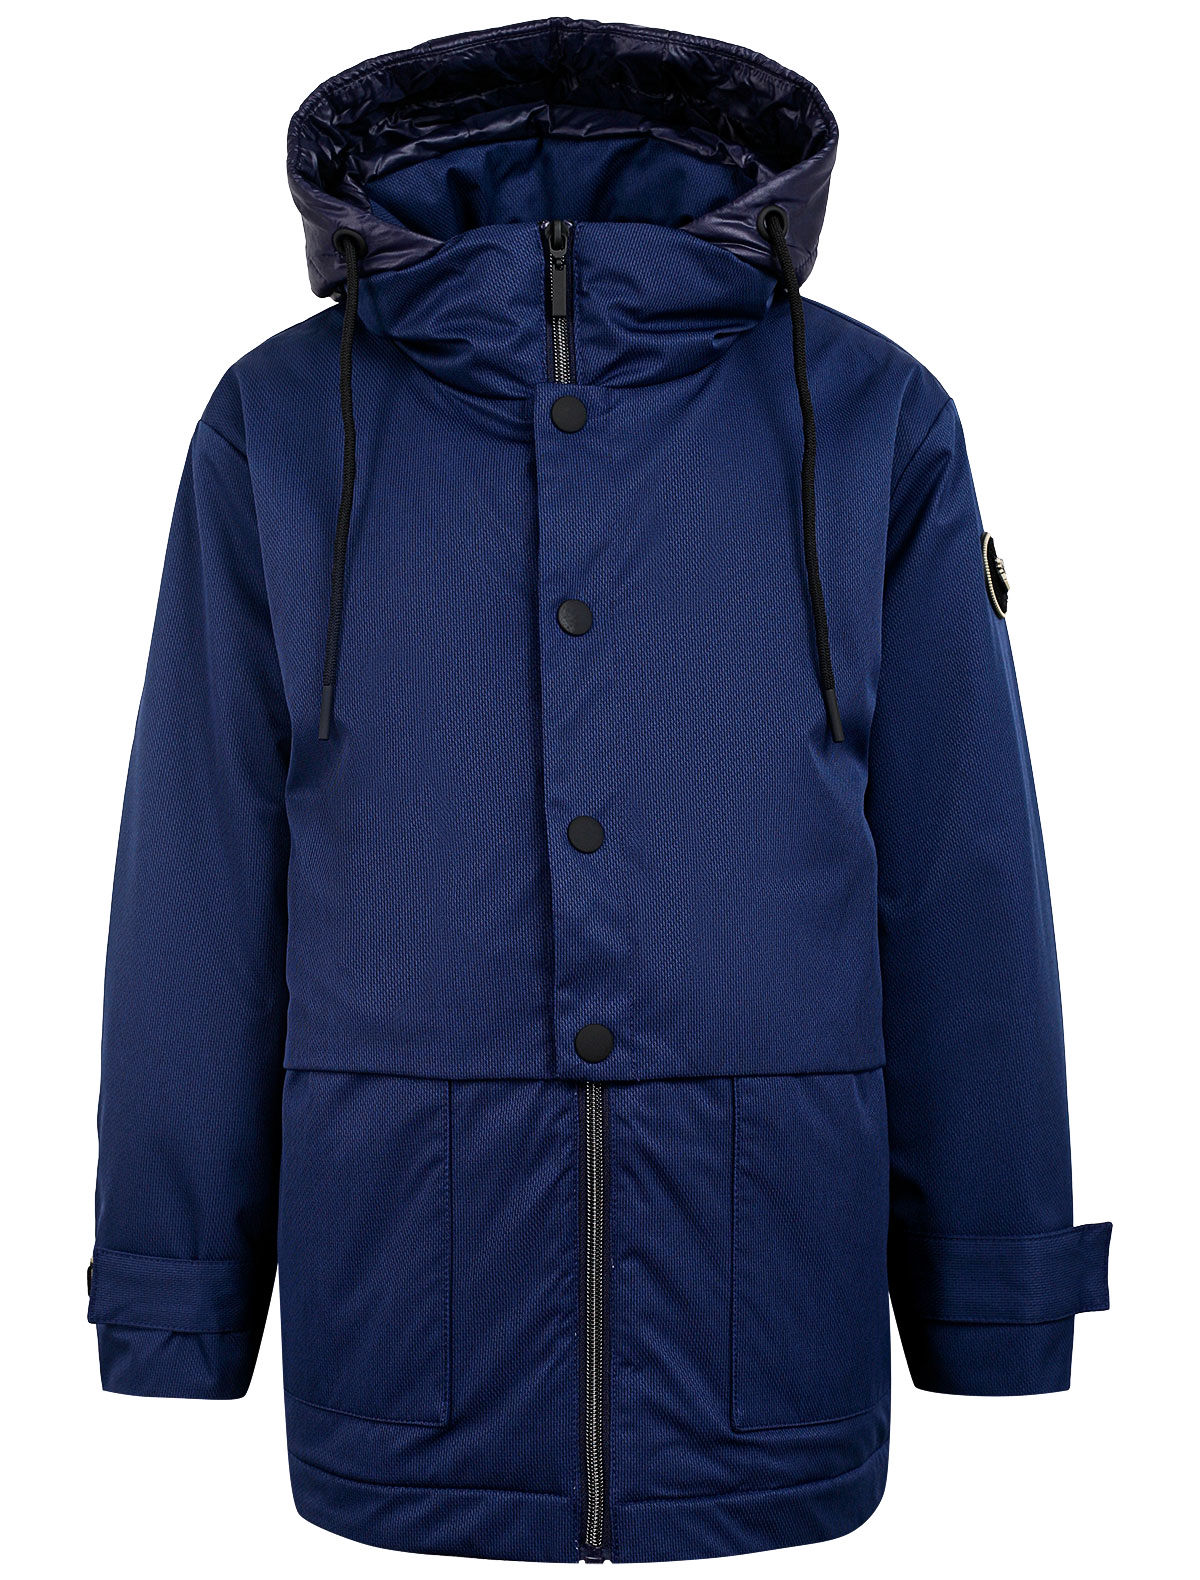 Куртка SILVER SPOON 2327564, цвет синий, размер 7 1074519180170 - фото 1